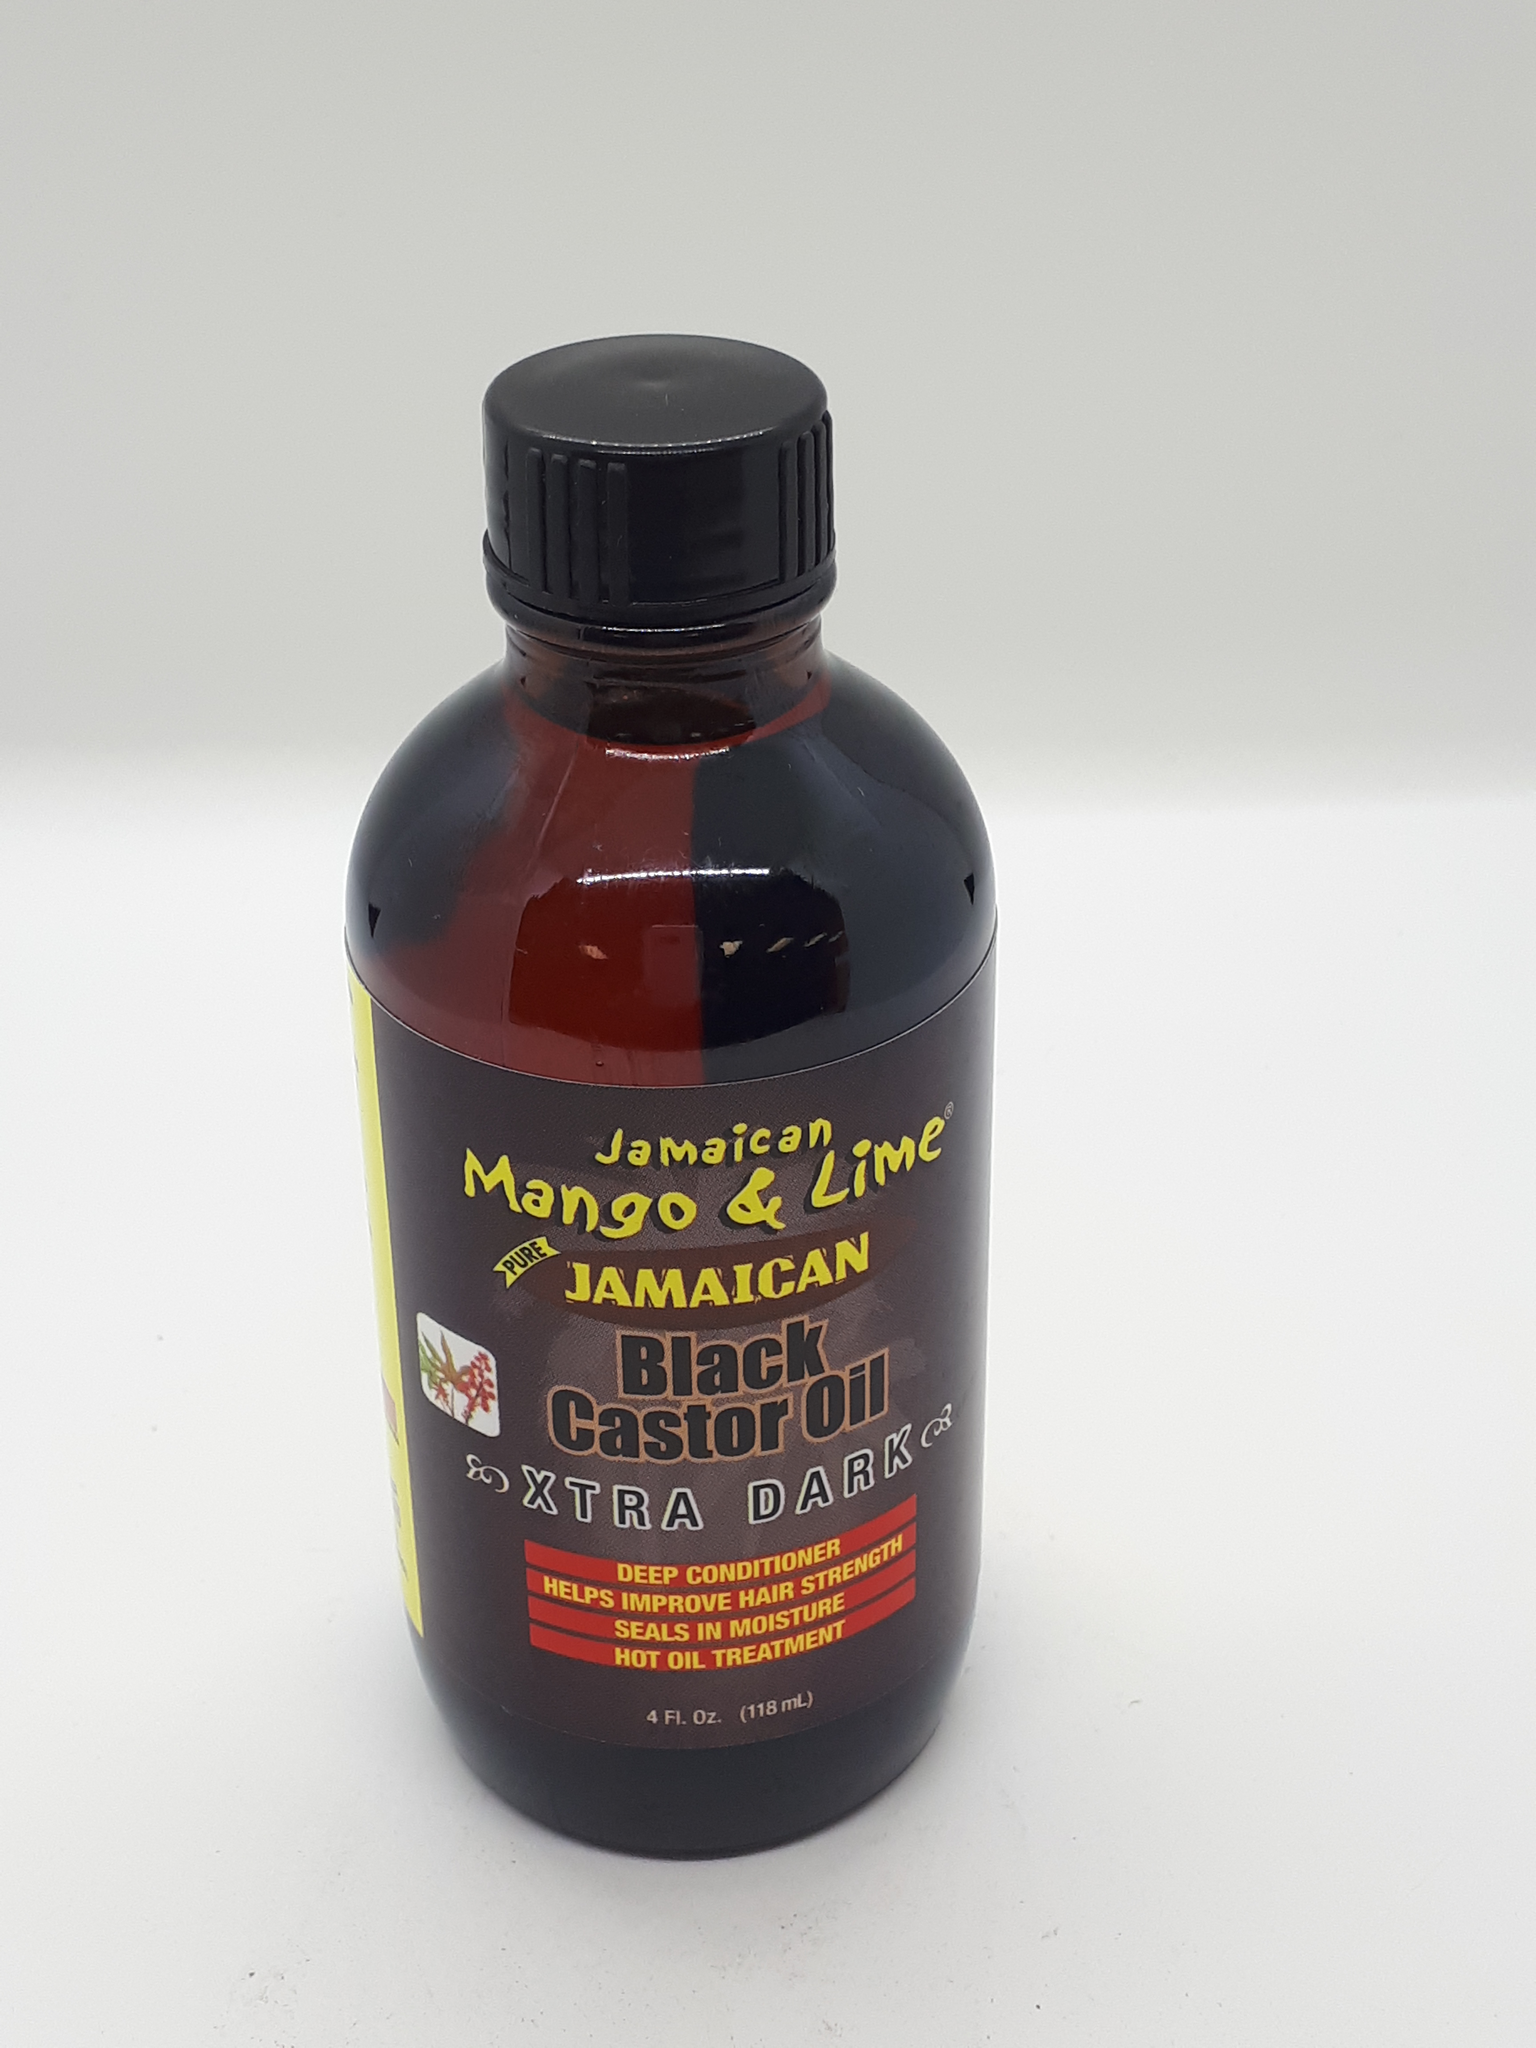 JAMAICAN MANGO & LIME - Jamaican Black Castor Oil – Xtra Dark